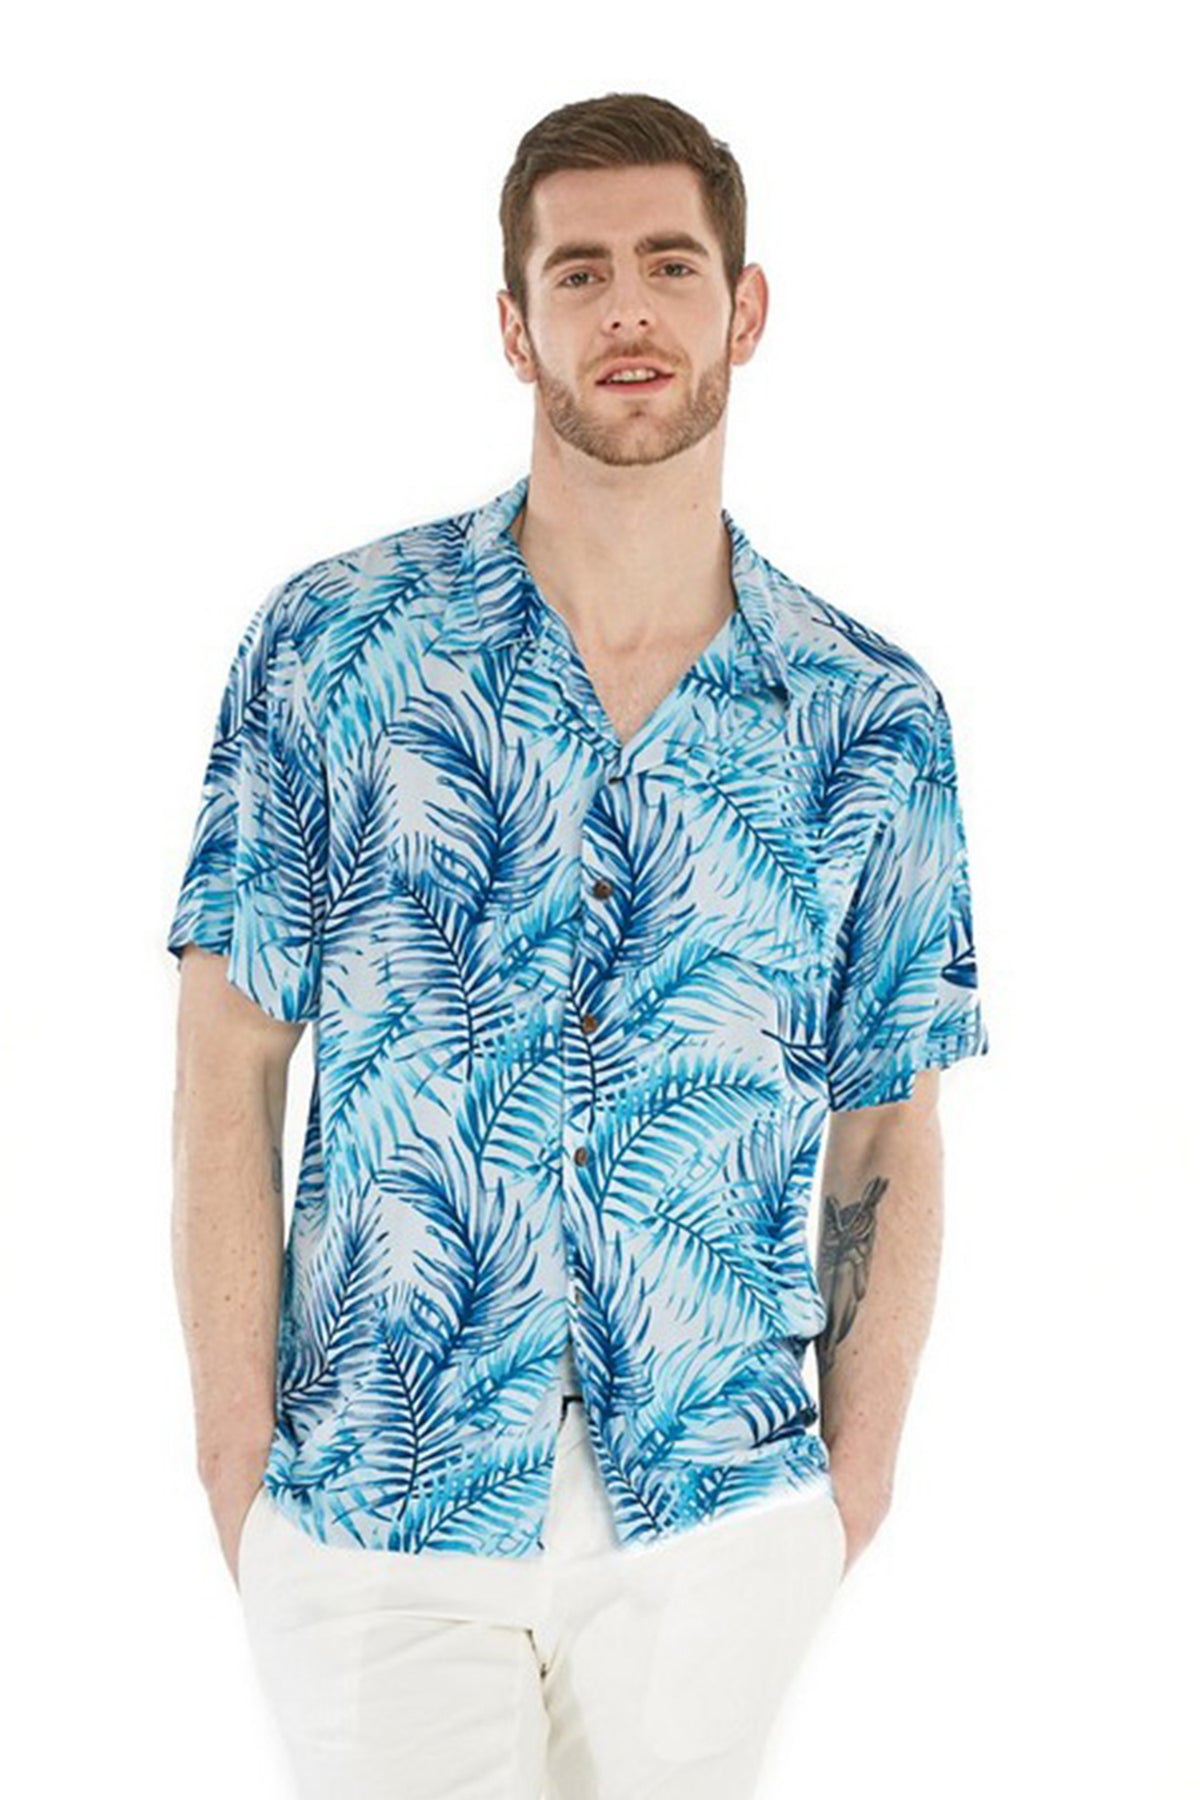 Hawaii Hangover Men's Hawaiian Shirt Aloha Shirt 2XL Simply Blue Leaves